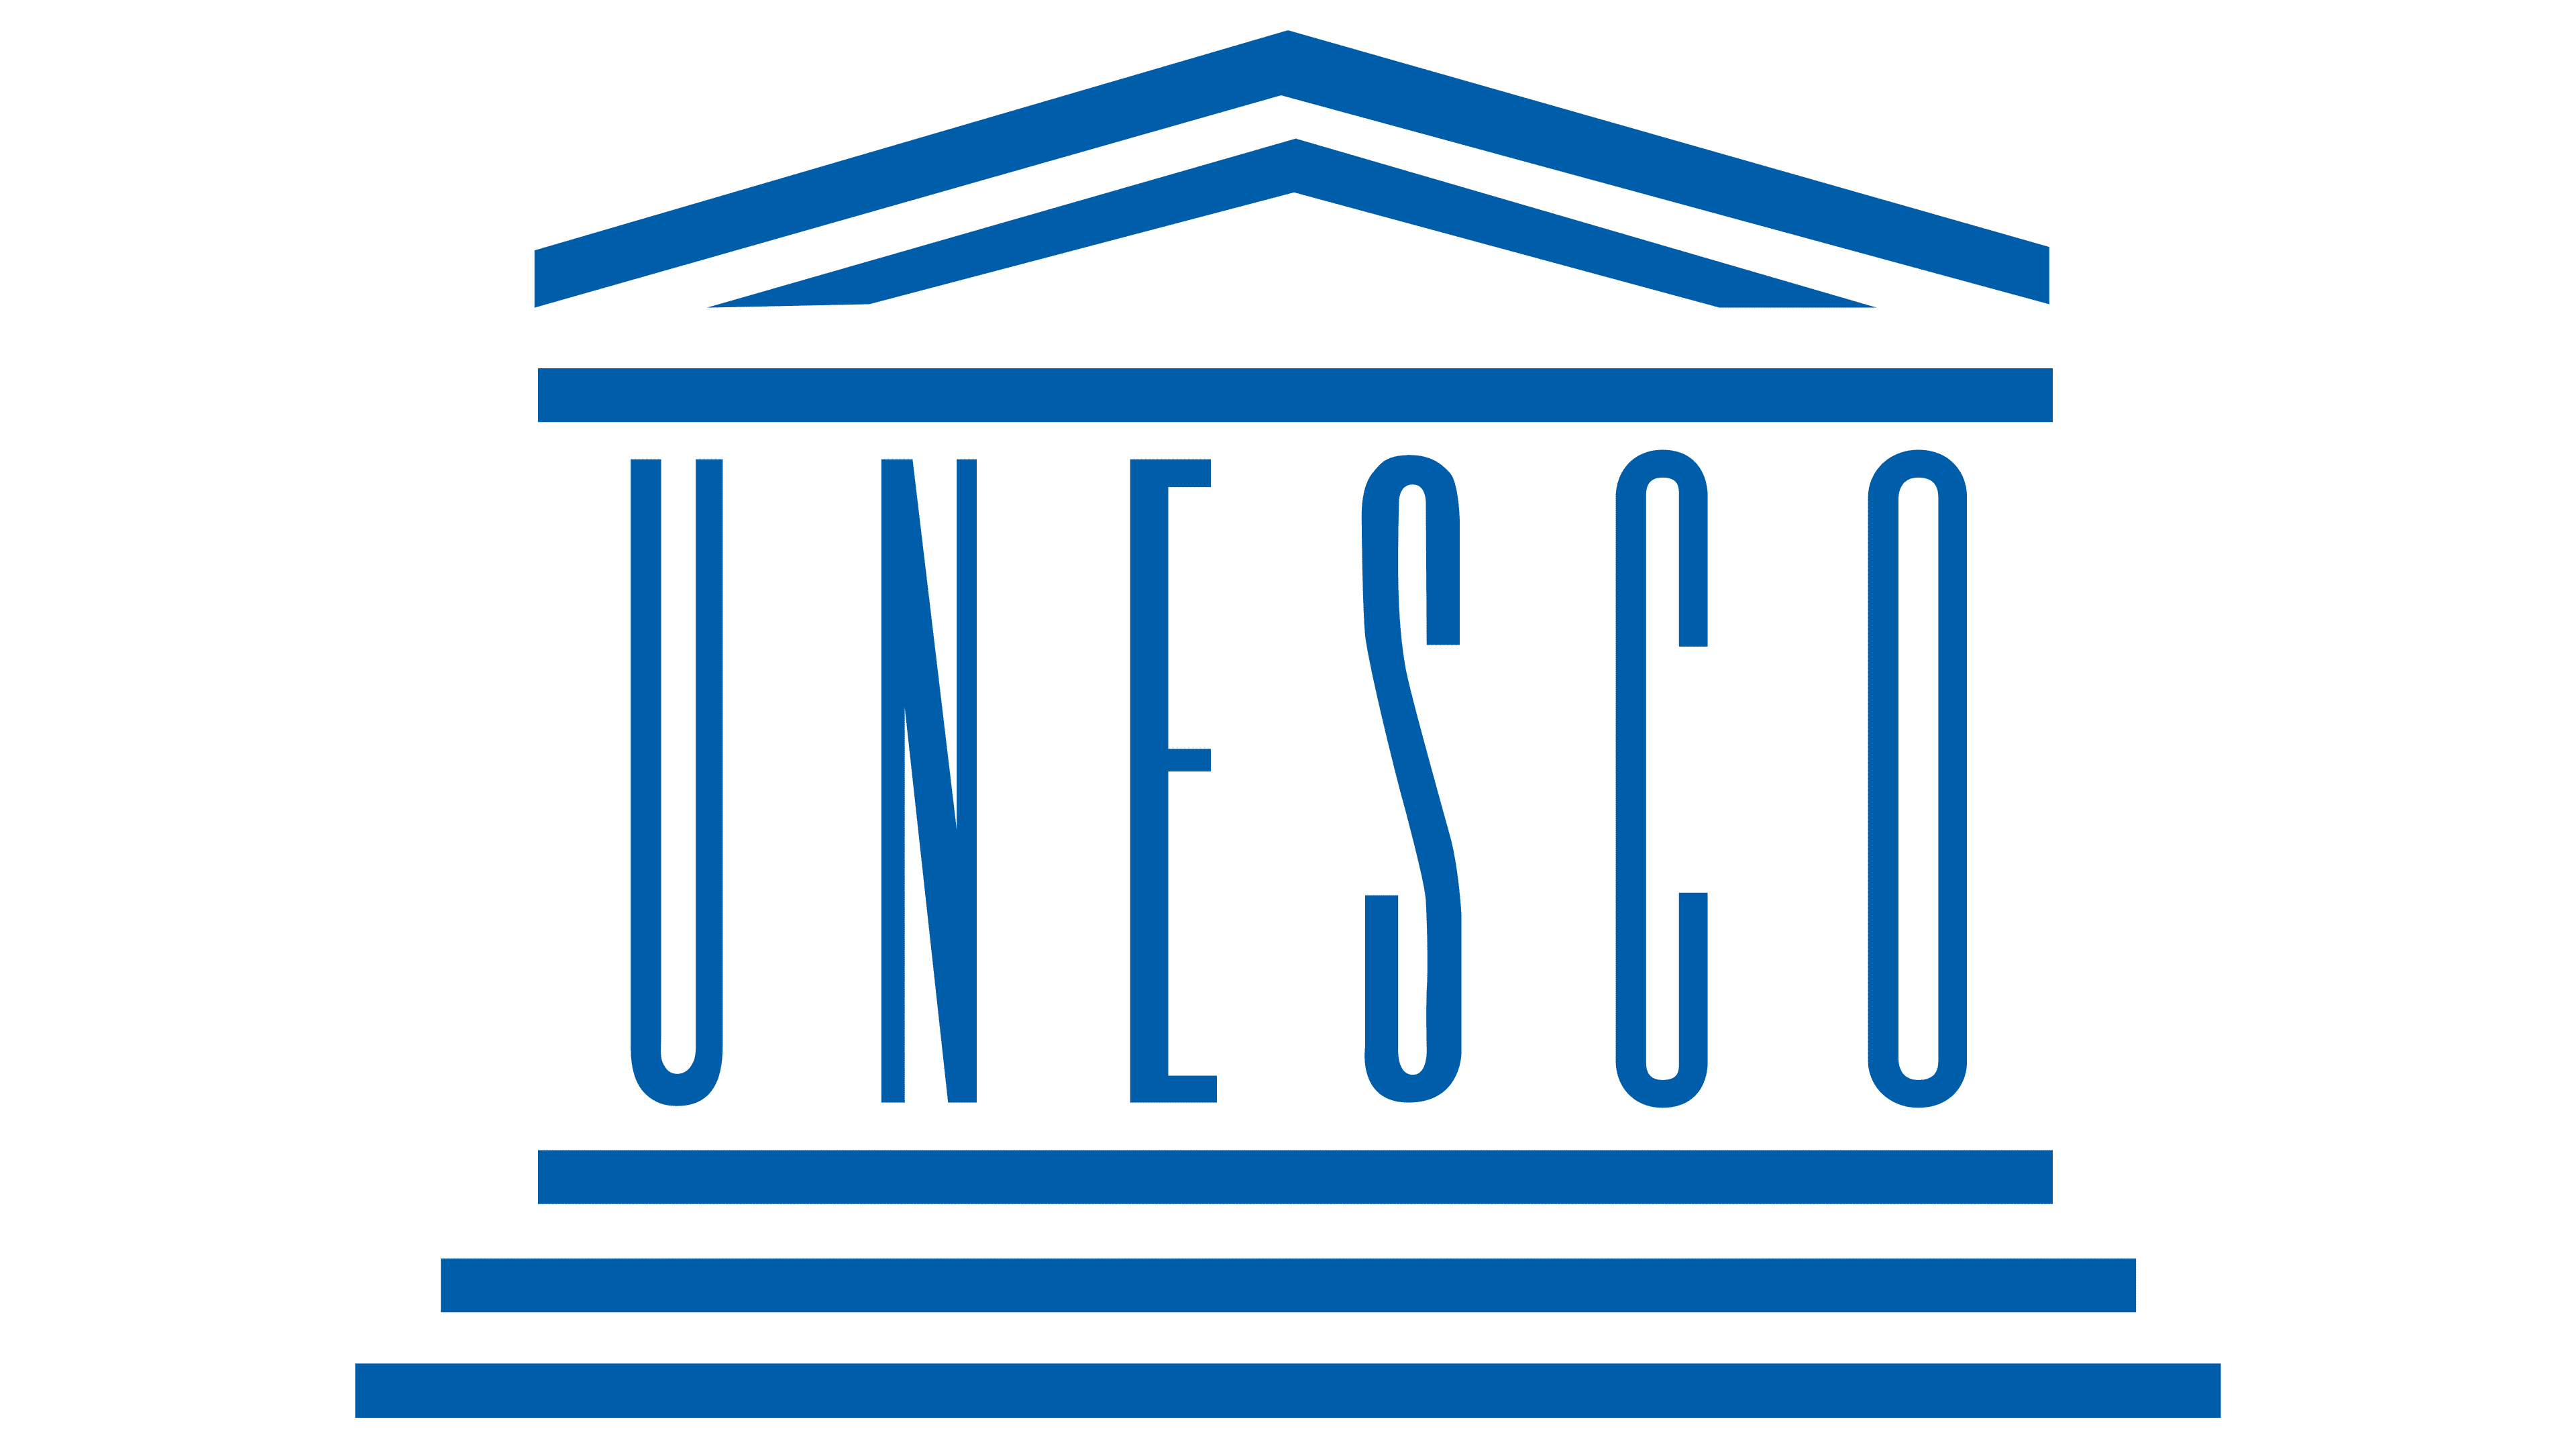 UNESCO-logo.png